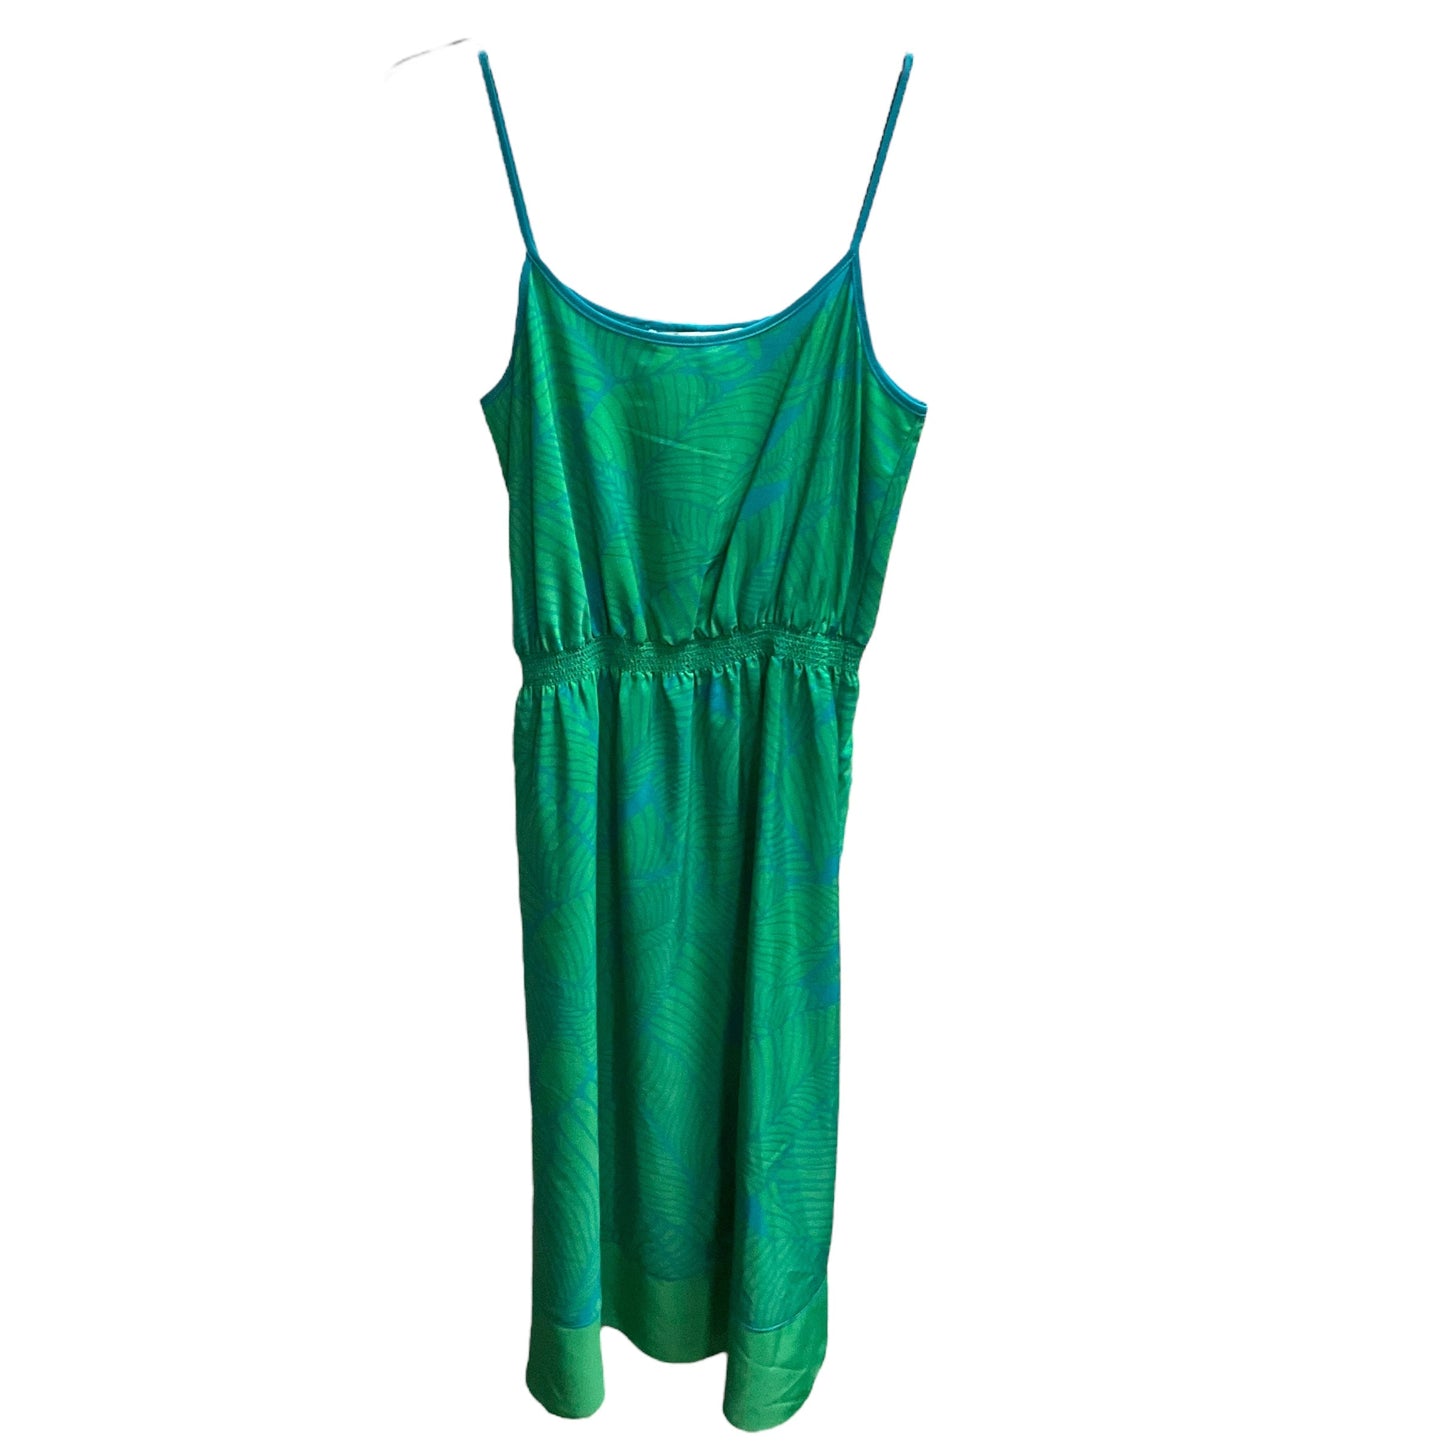 Blue & Green Dress Casual Short Loft, Size Xs